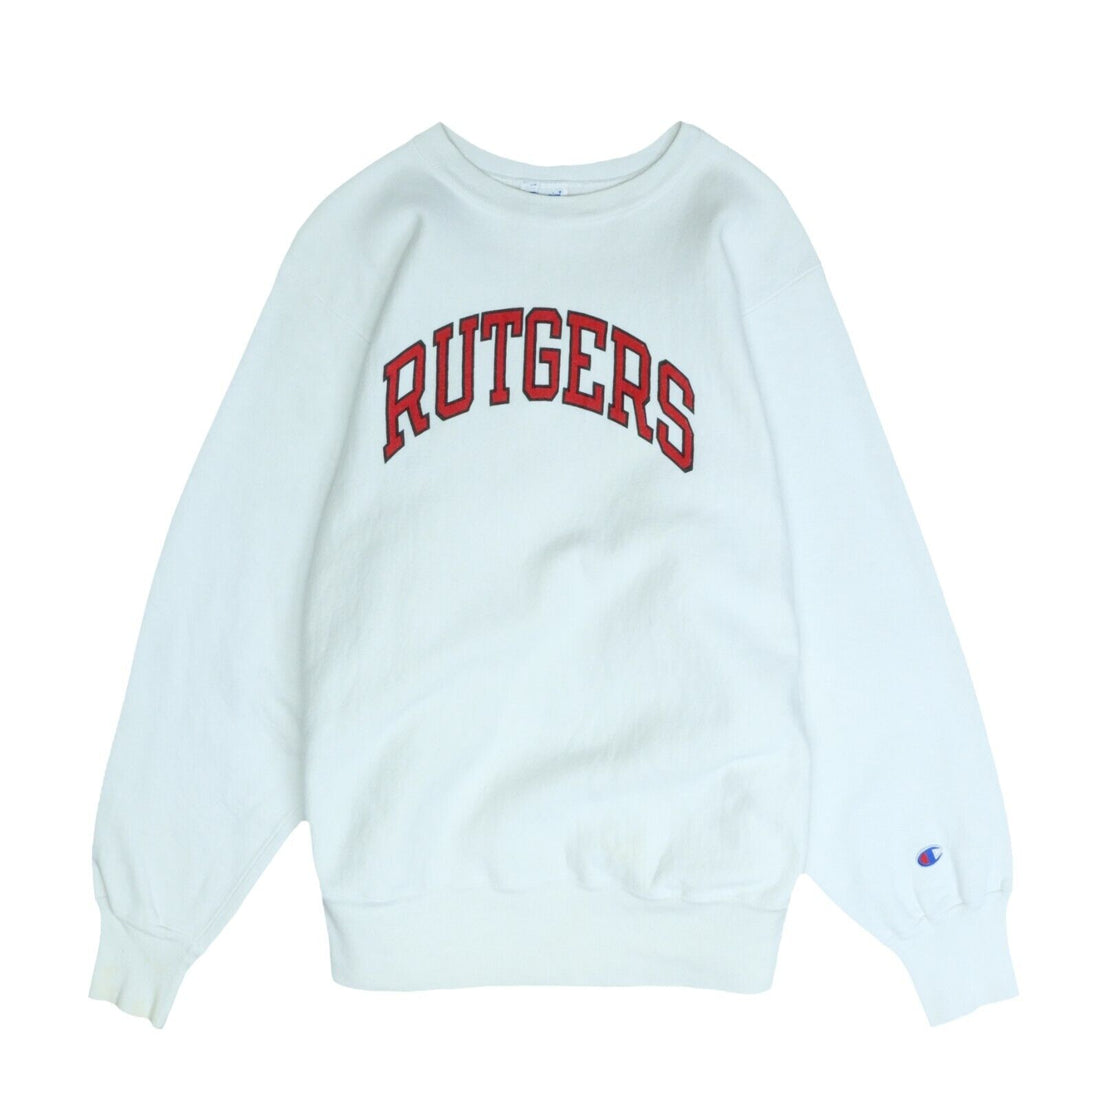 Vintage Rutgers Scarlet Knights Champion Reverse Weave Sweatshirt Large 80s NCAA